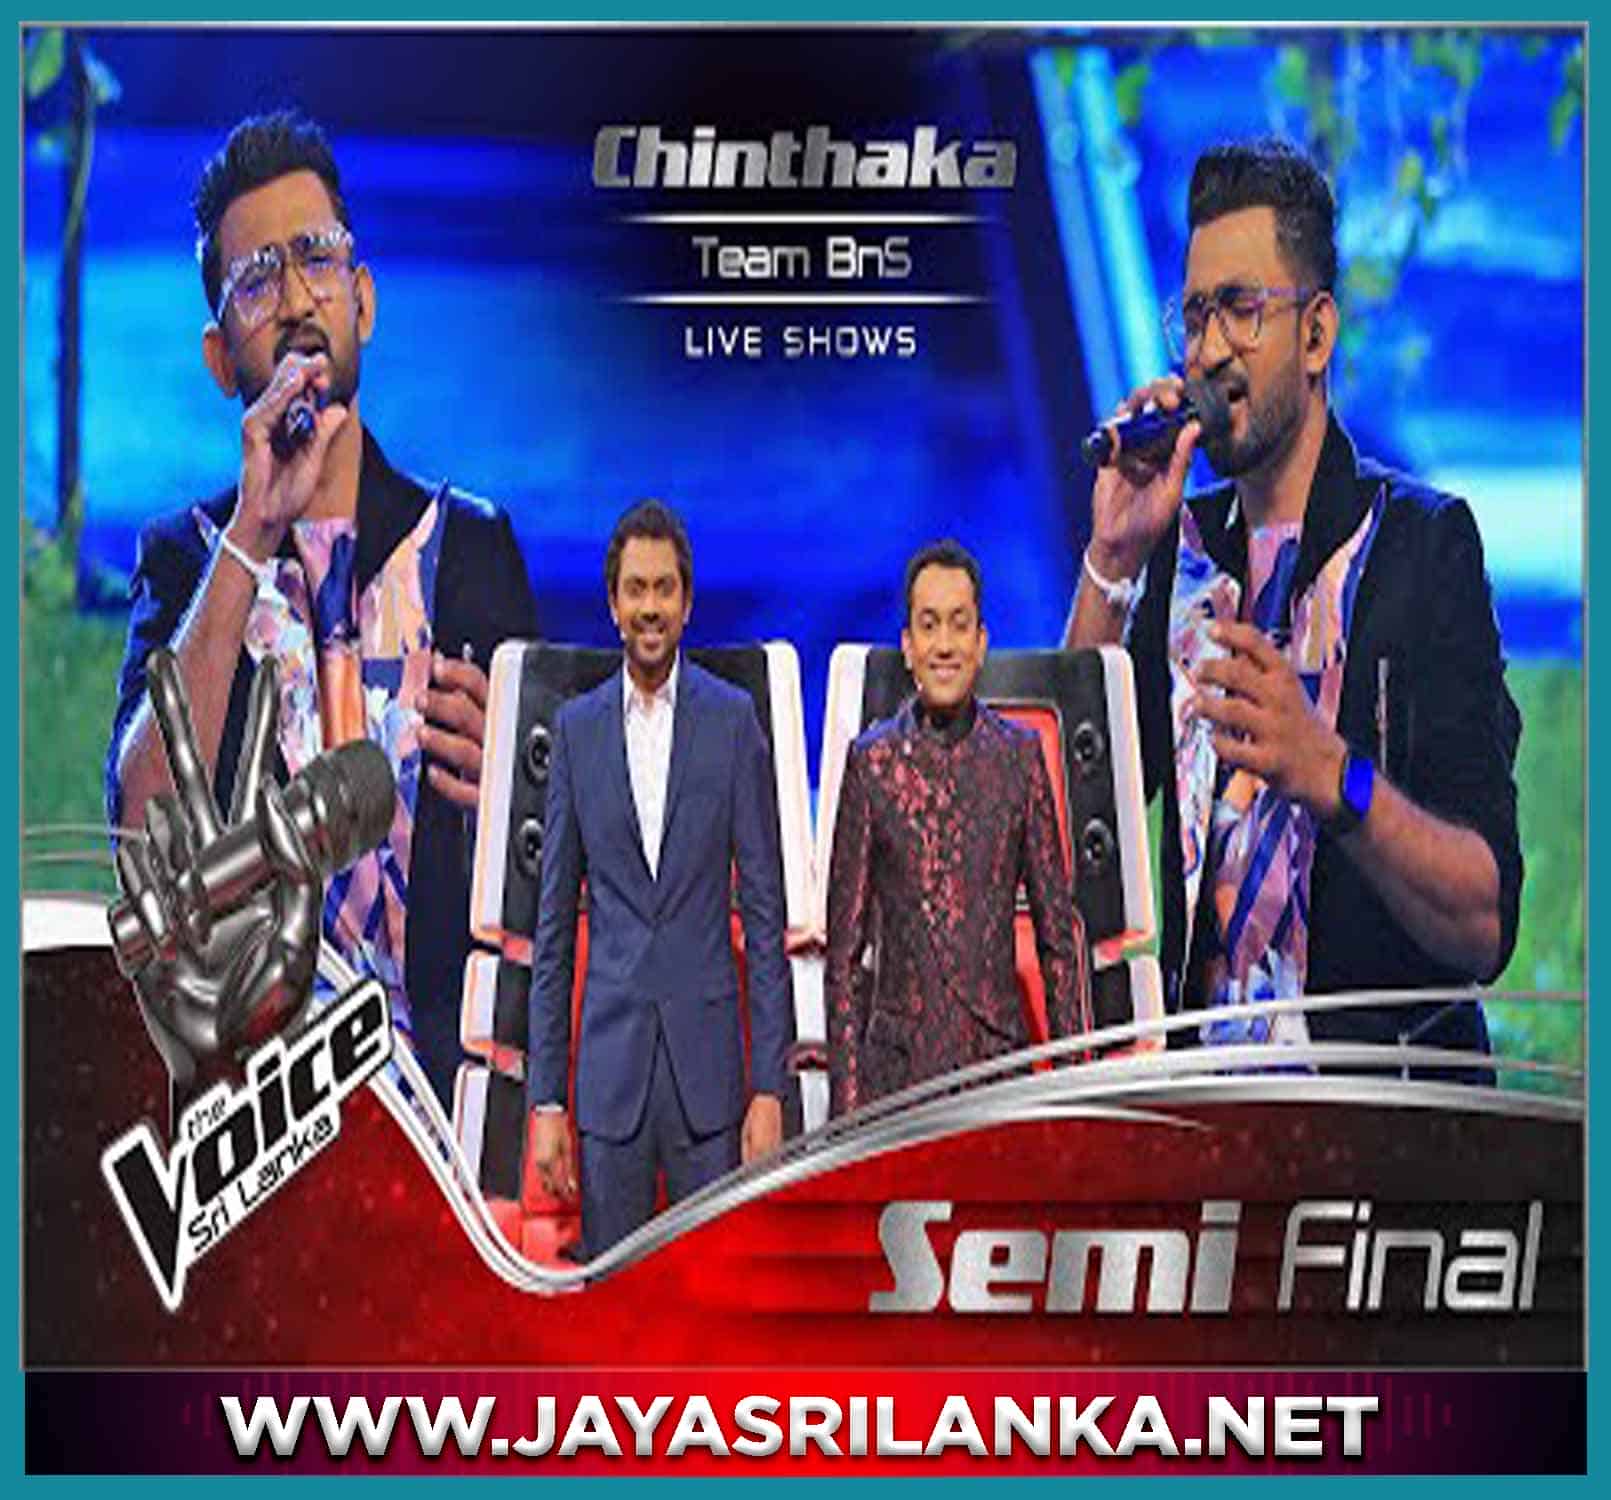 Ahenawa Nam Hitha (The Voice Sri Lanka Semi Final)